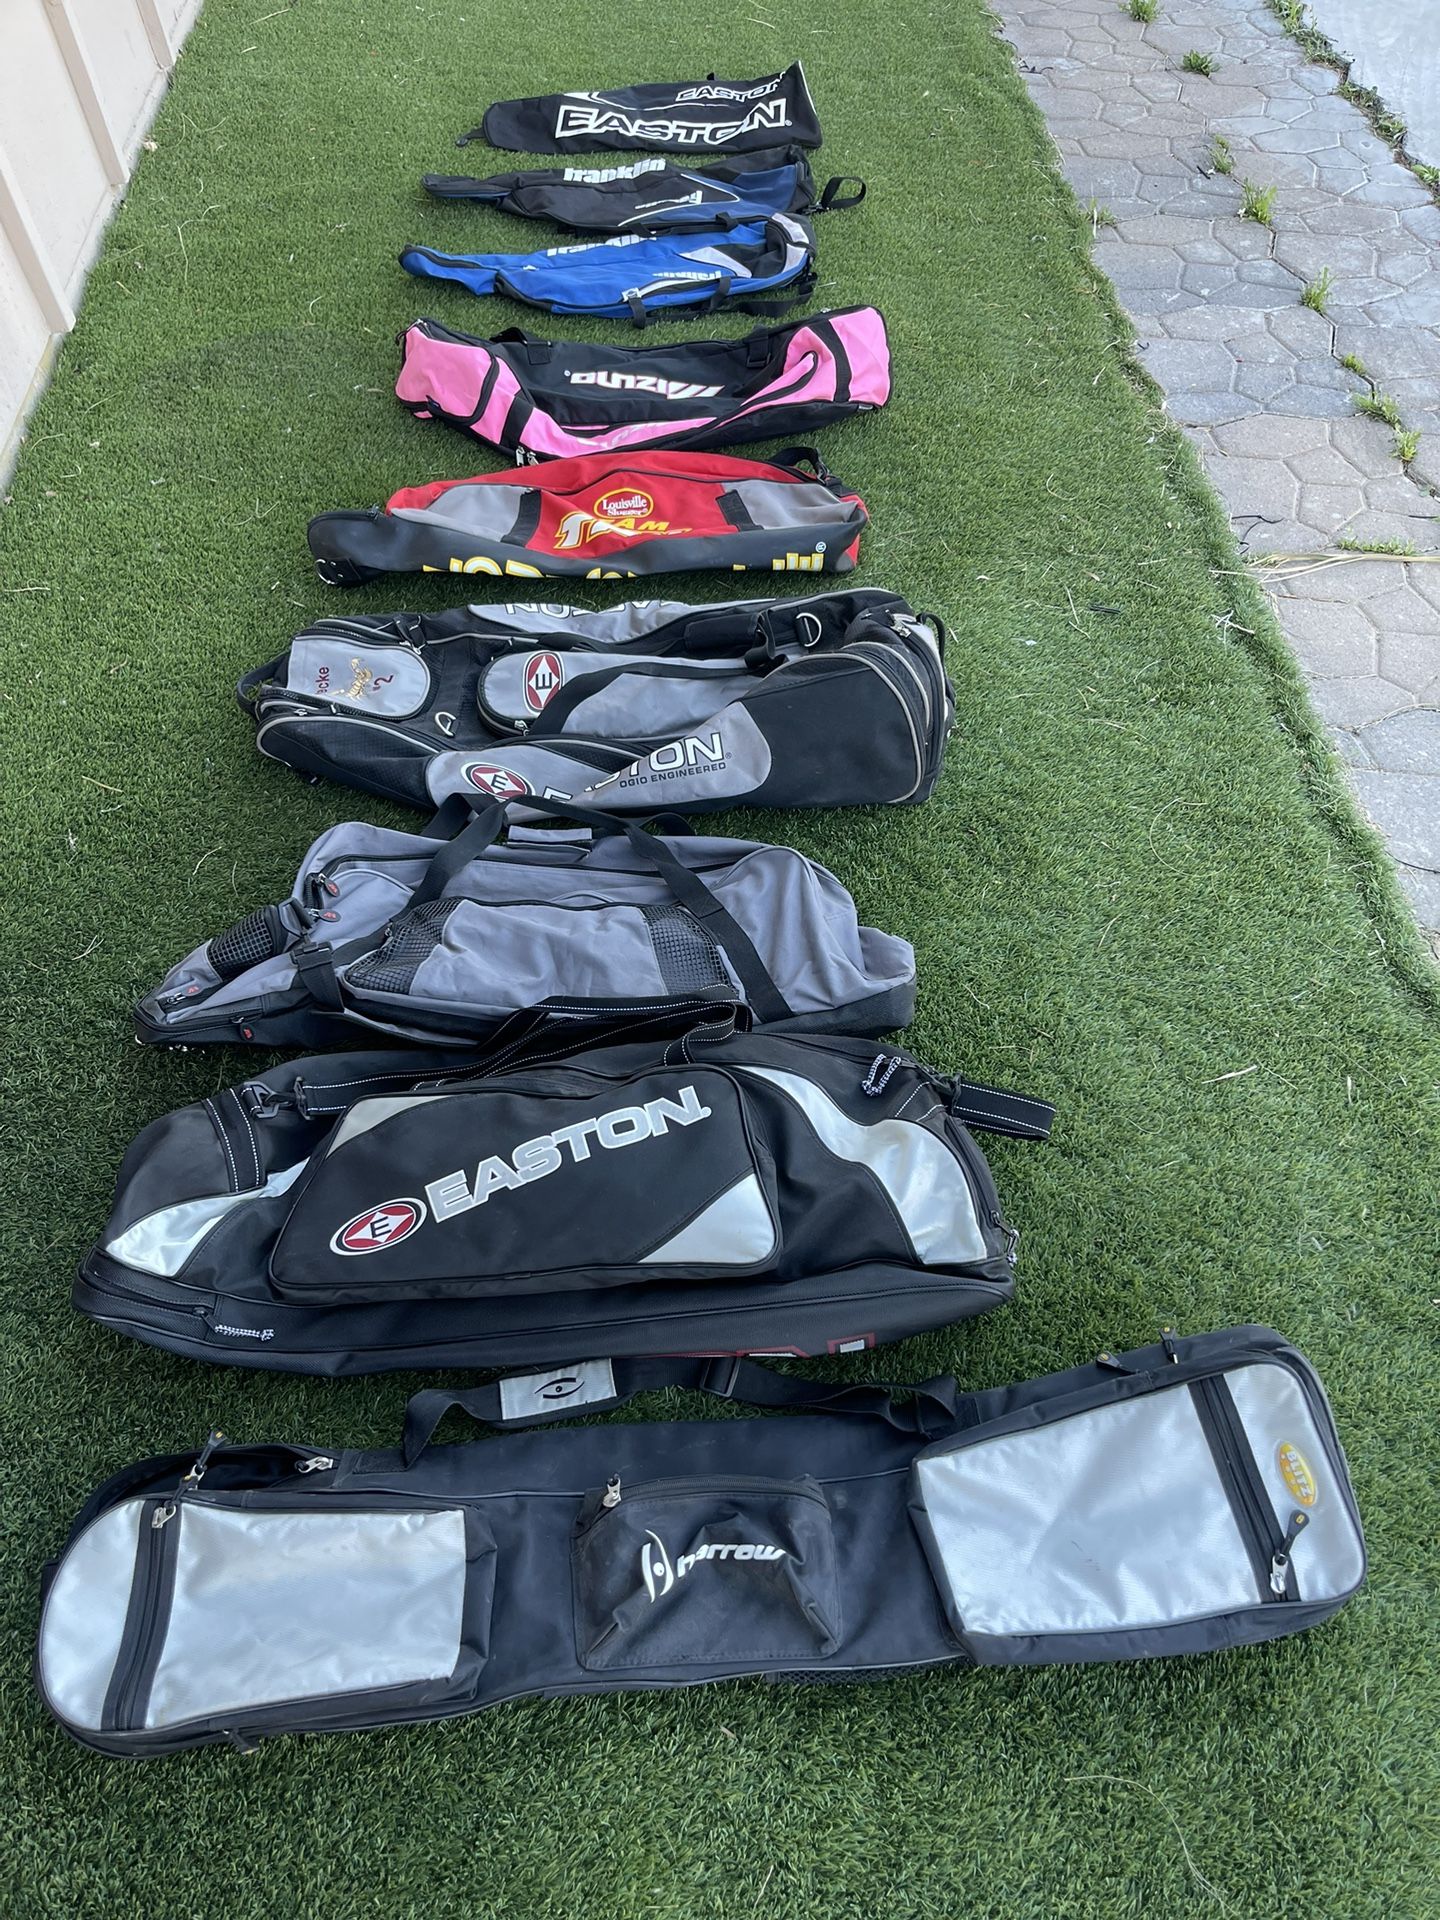 Baseball, Softball Bat And Equipment Bags